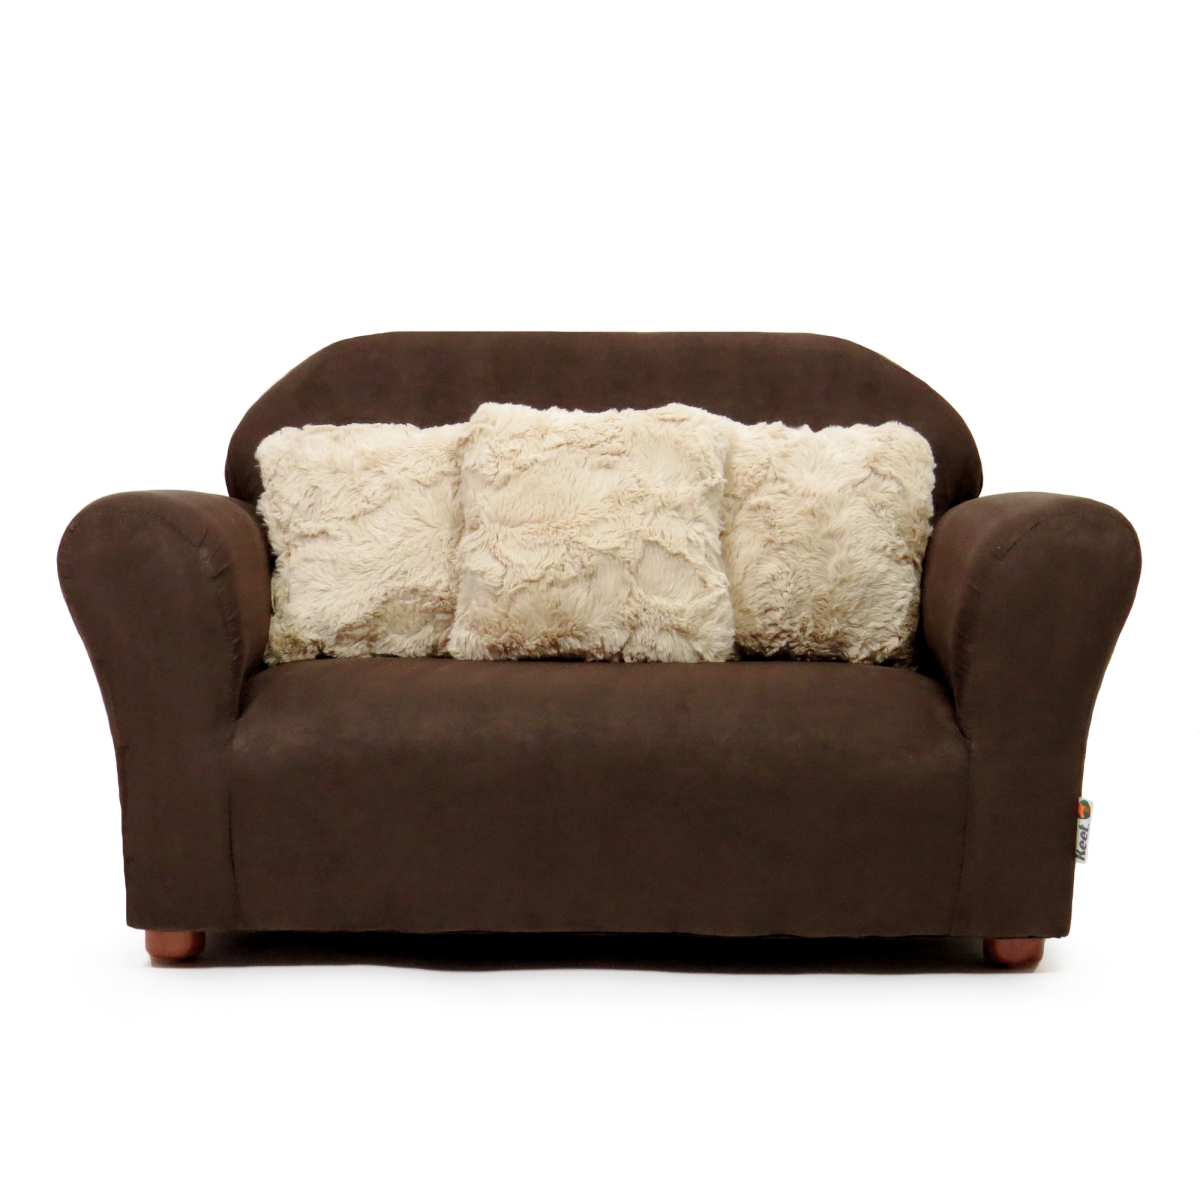 Sr081 Plush Childrens Sofa With Khaki Accent Pillows, Brown - 32 X 18 X 18 X In.